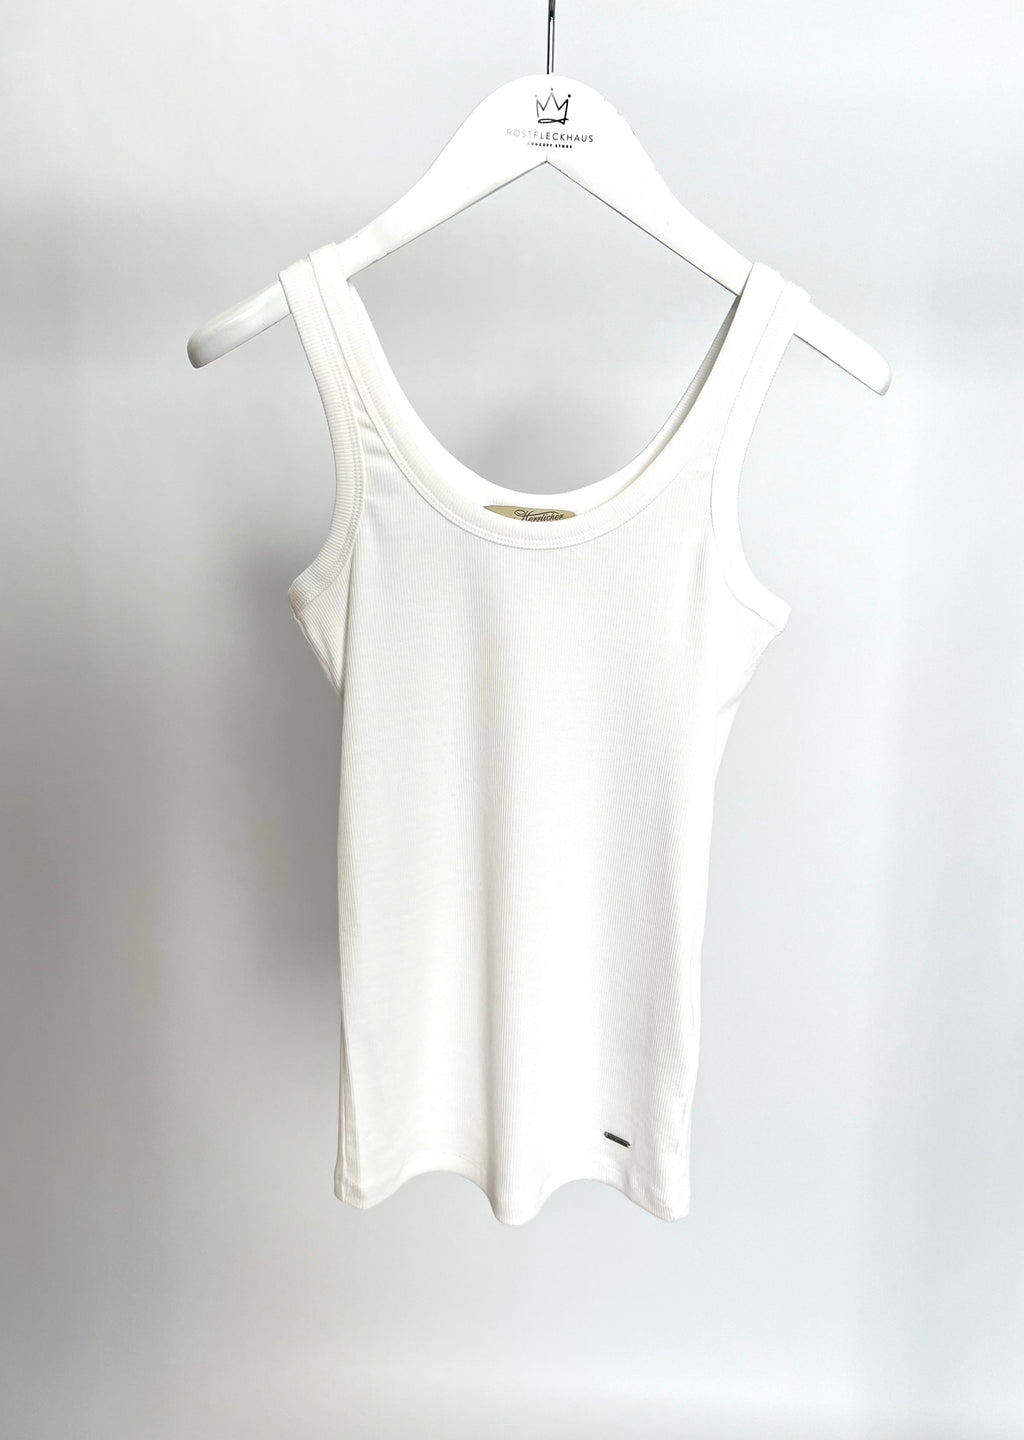 ROSTFLECKHAUS Tops Shirts & – Concept Store –